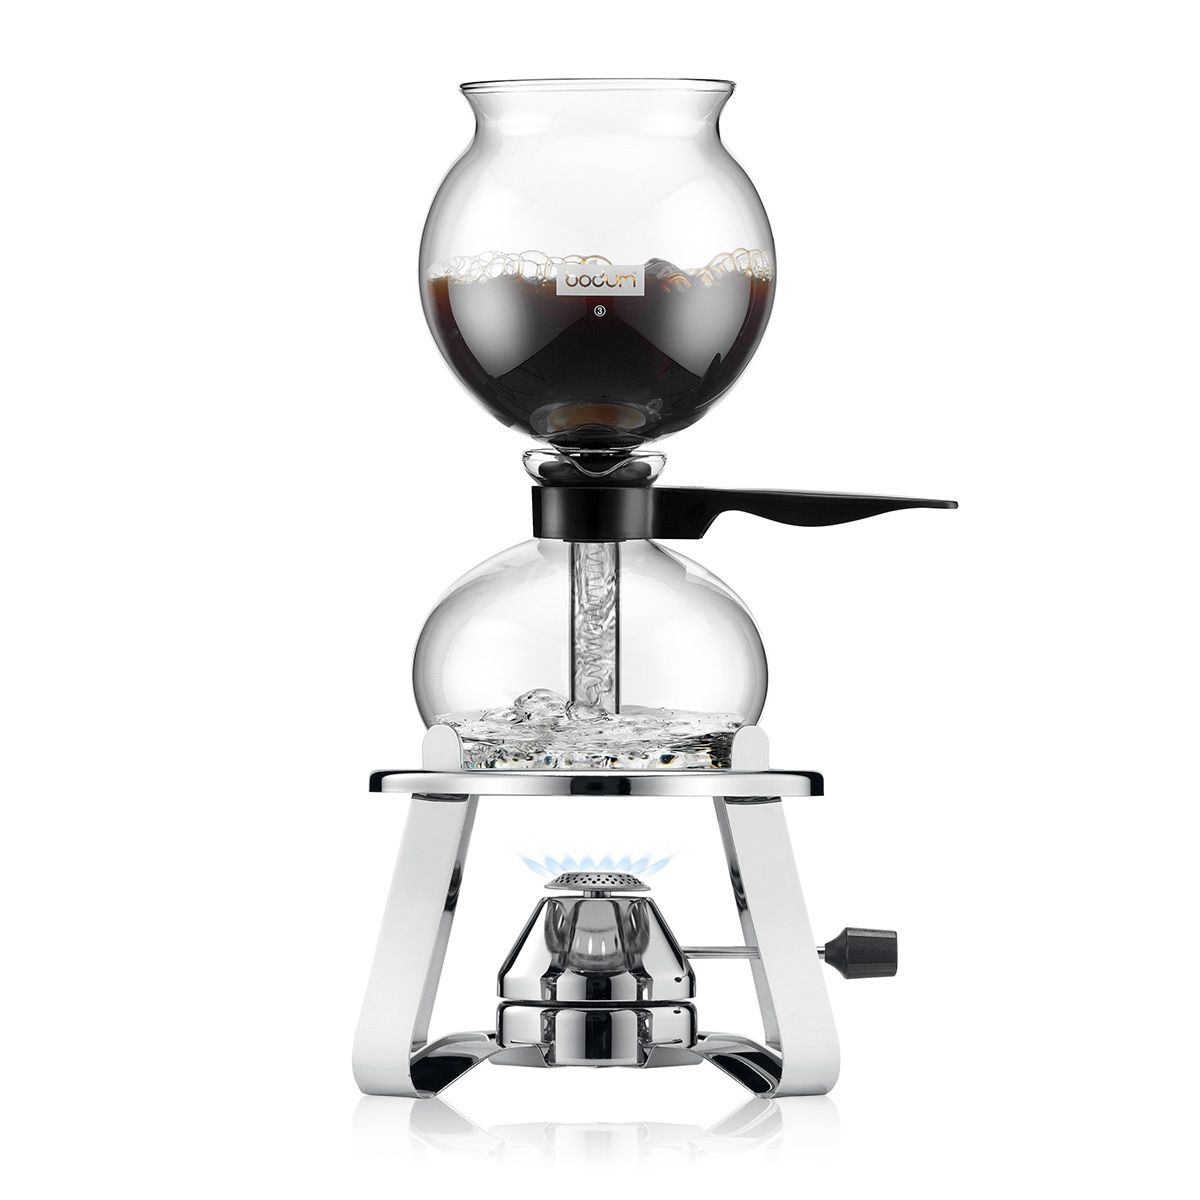 PEBO Vacuum Coffee maker 1 L, Black - Bodum @ RoyalDesign